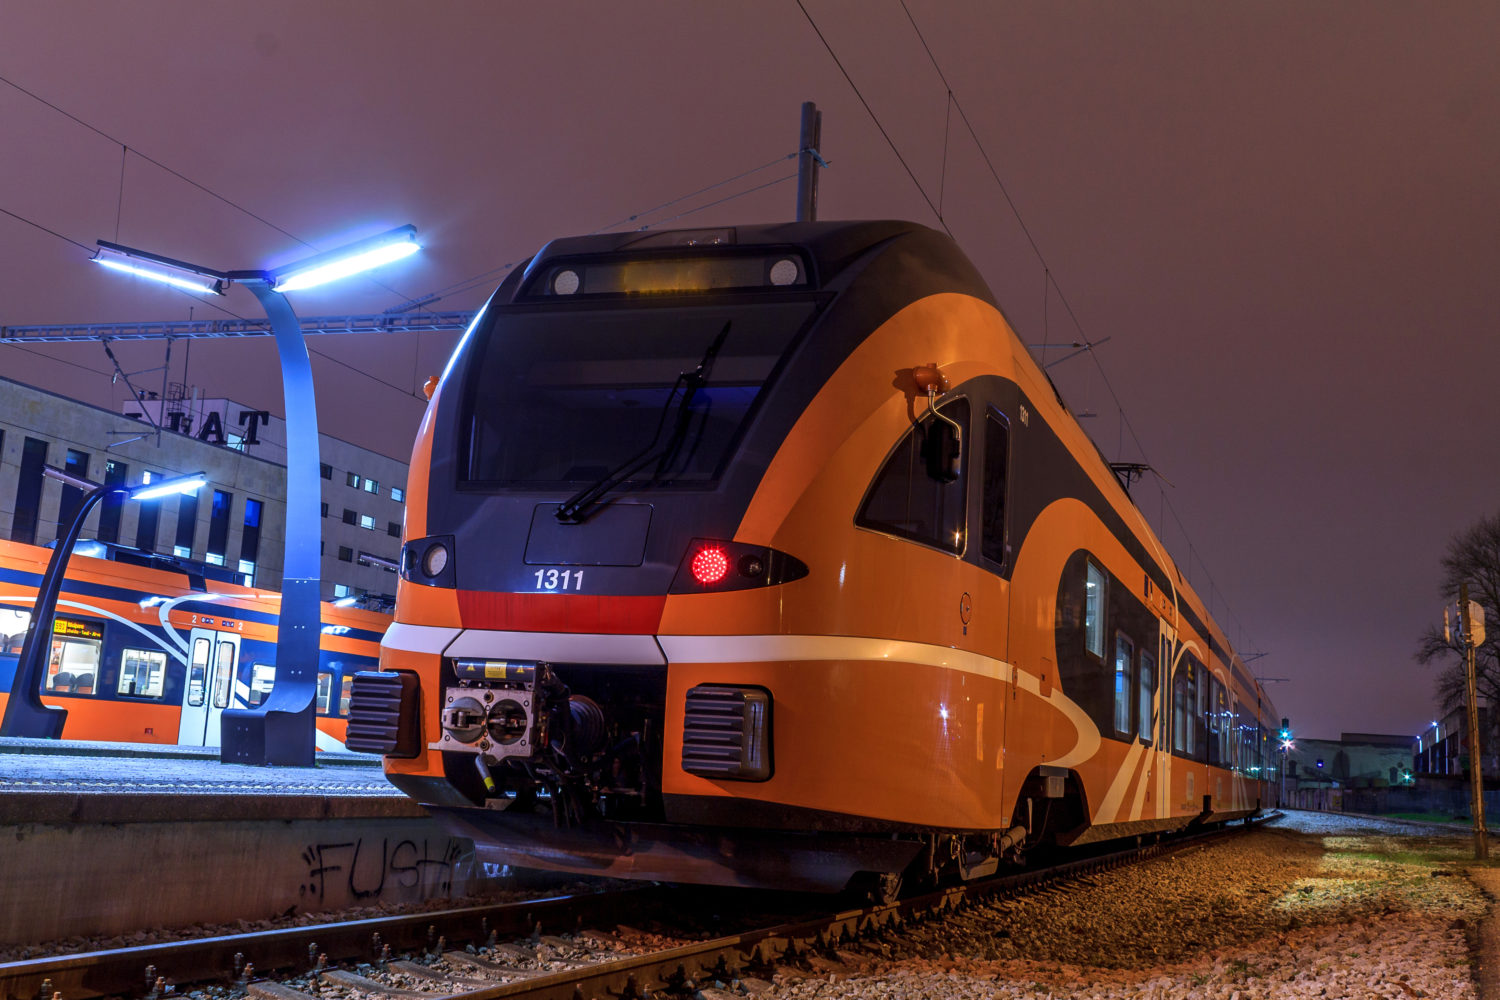 Orange train waiting in train station to go from Tallinn to Riga